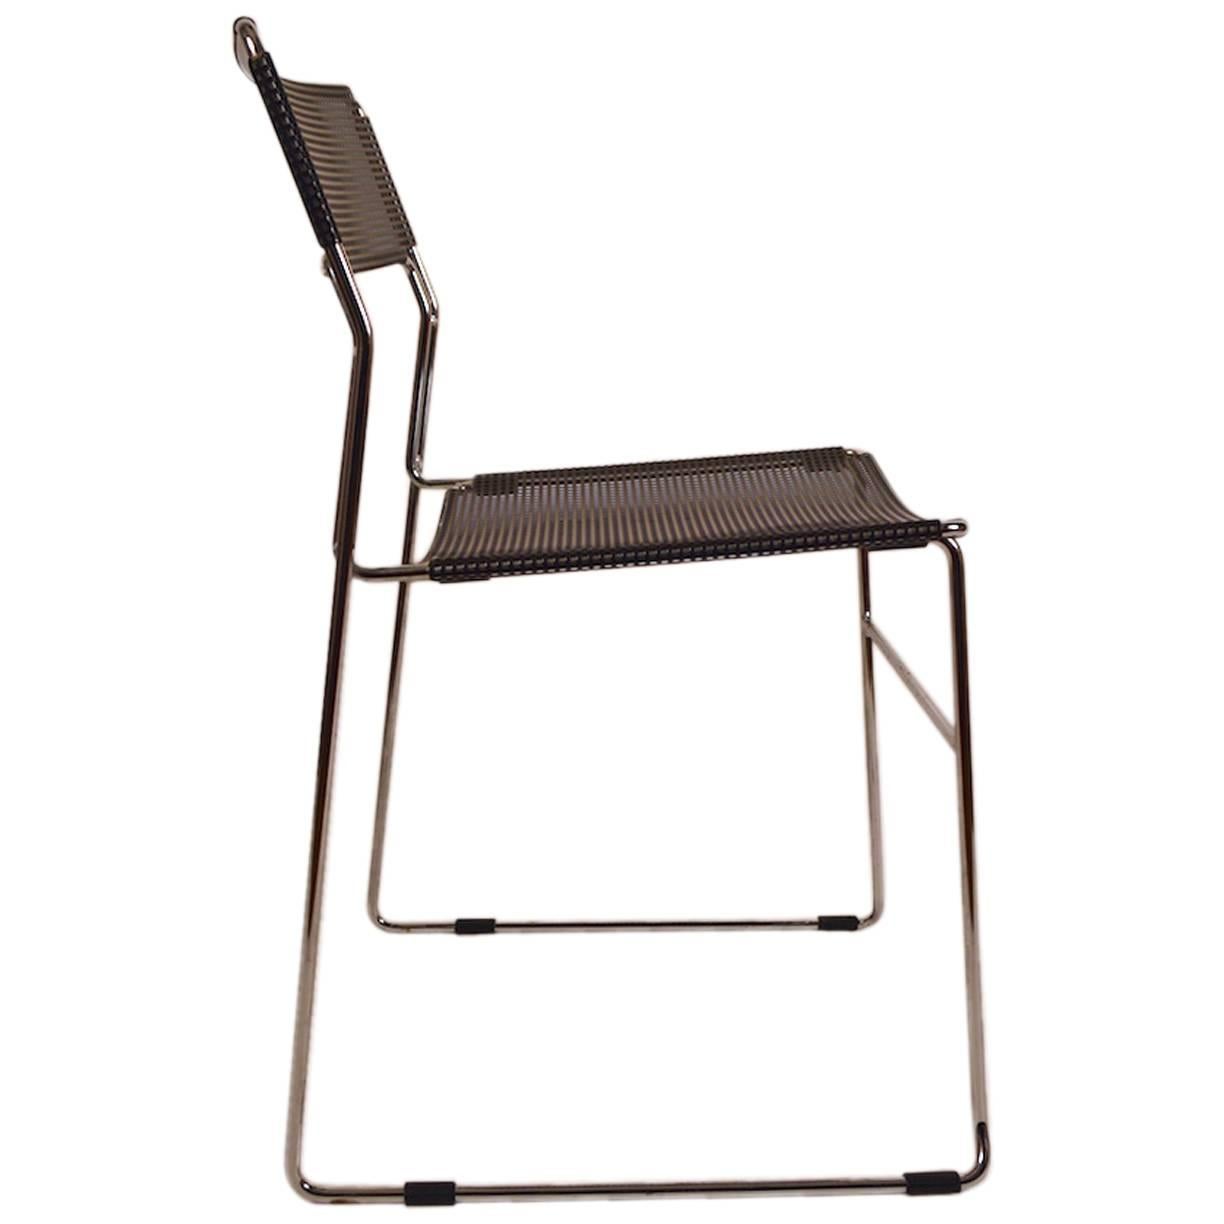 Black and Chrome Metal Mesh Chair